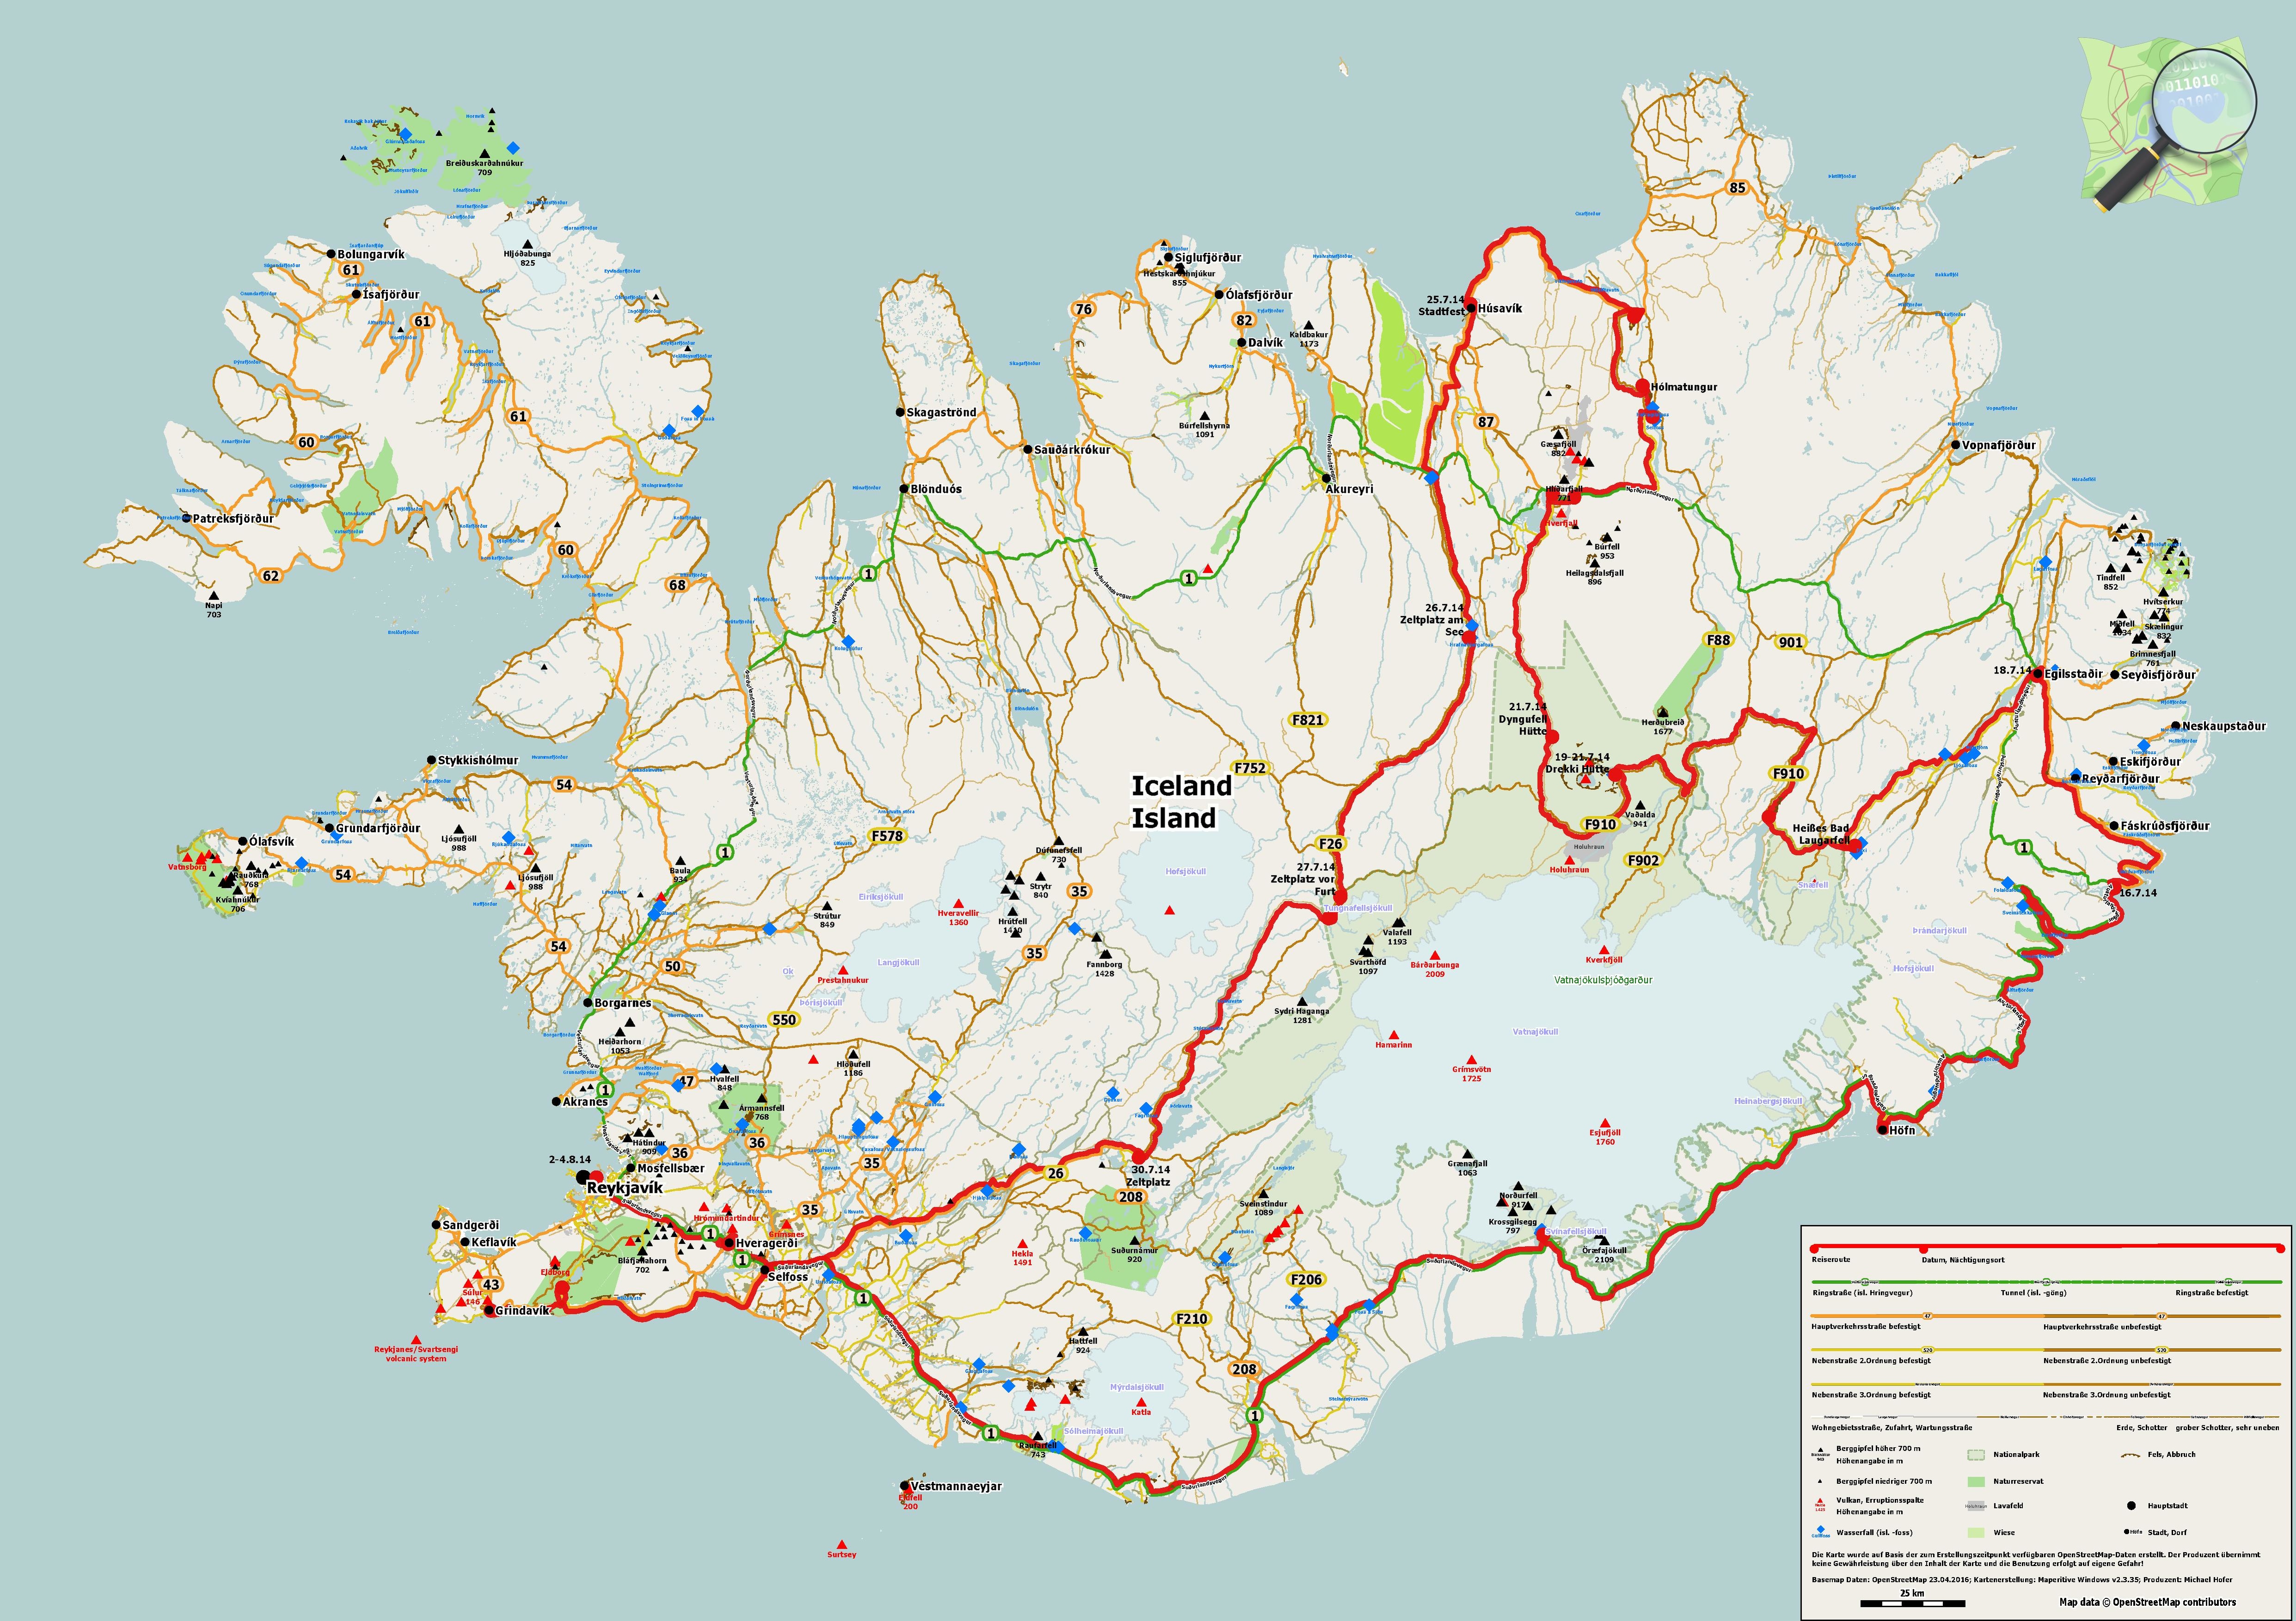 island karte pdf File Karte Island Glt16 Pdf Openstreetmap Wiki island karte pdf